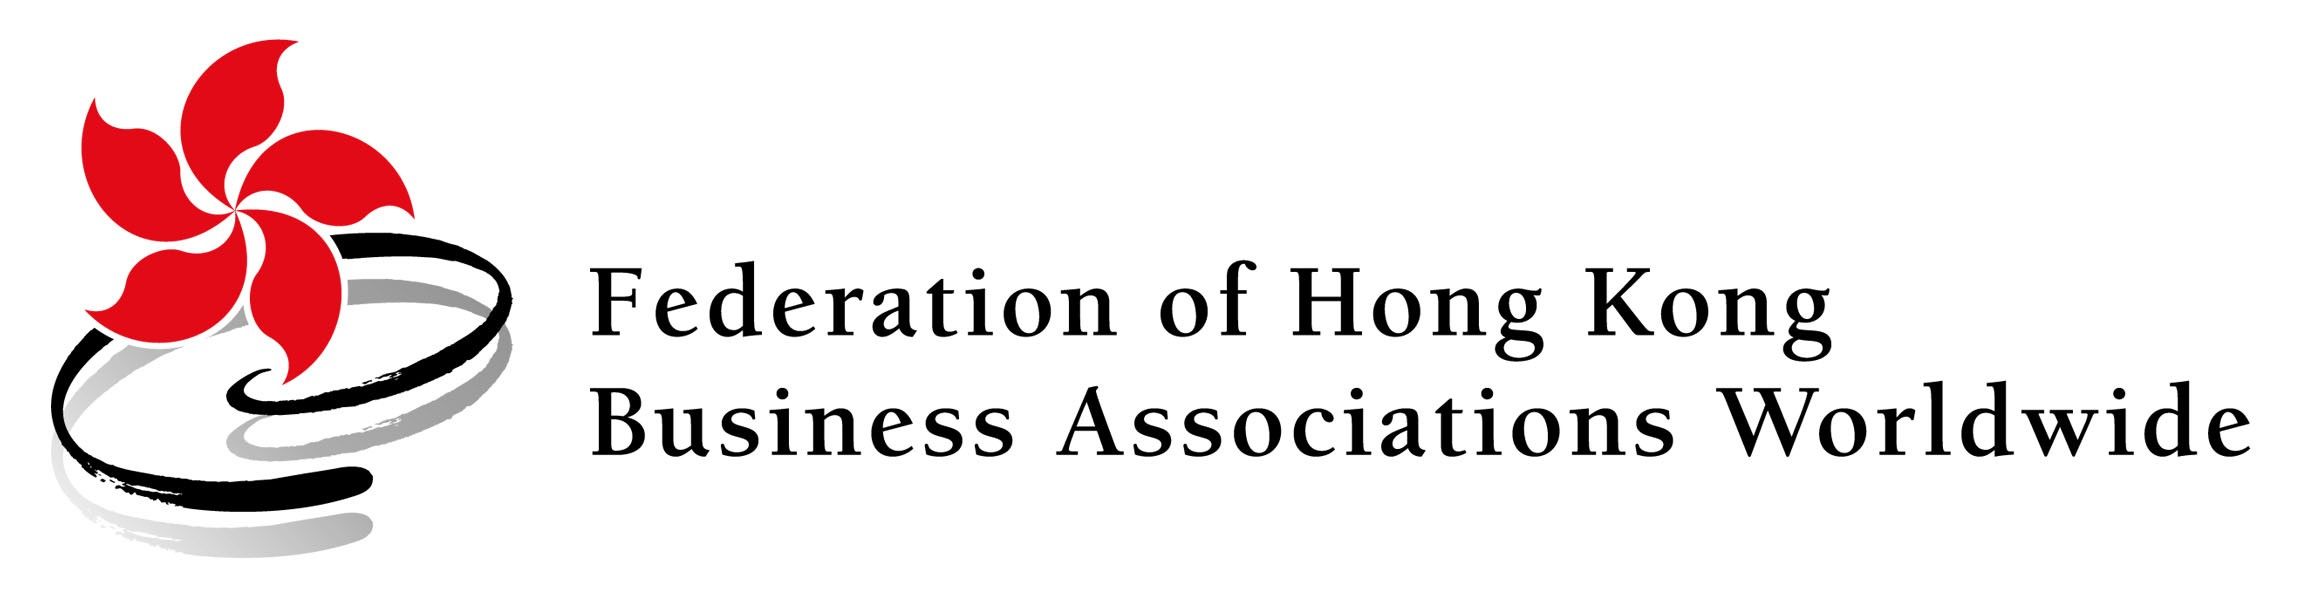 Логотип Федерации бизнес-ассоциаций Гонконга по всему миру (FHKBAW)